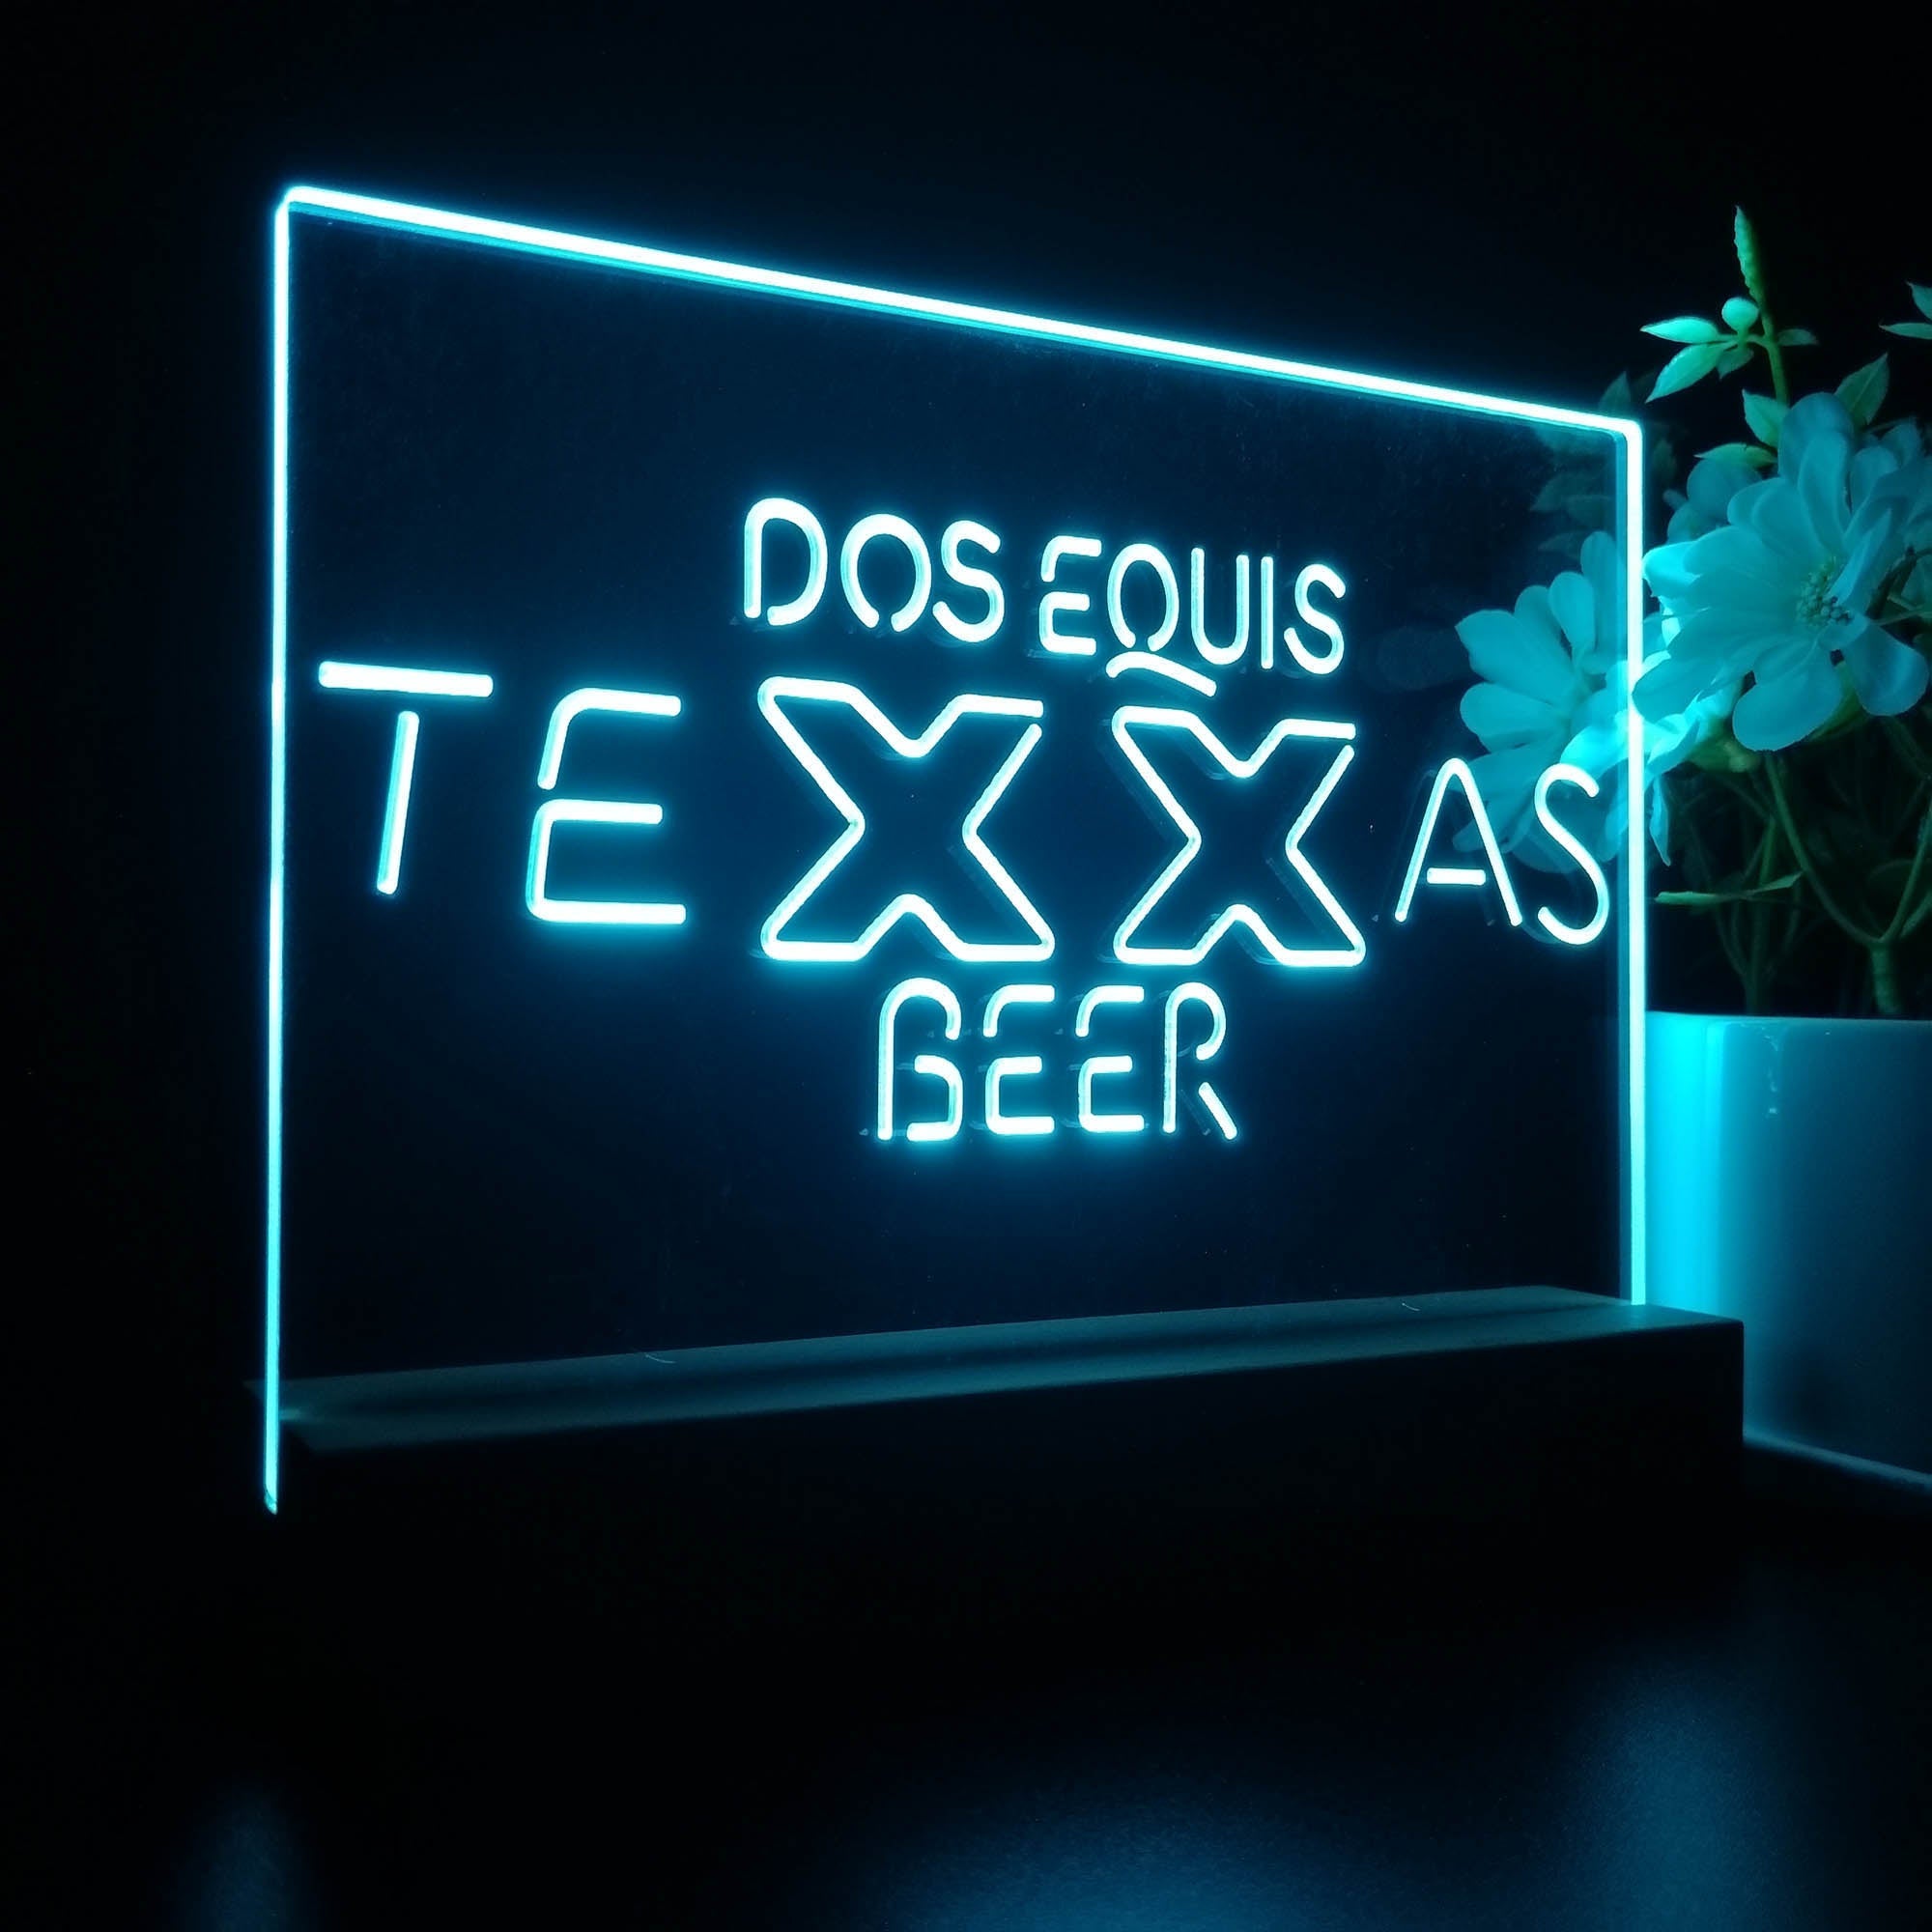 Texas Dos Equis Beer Neon Sign Pub Bar Lamp